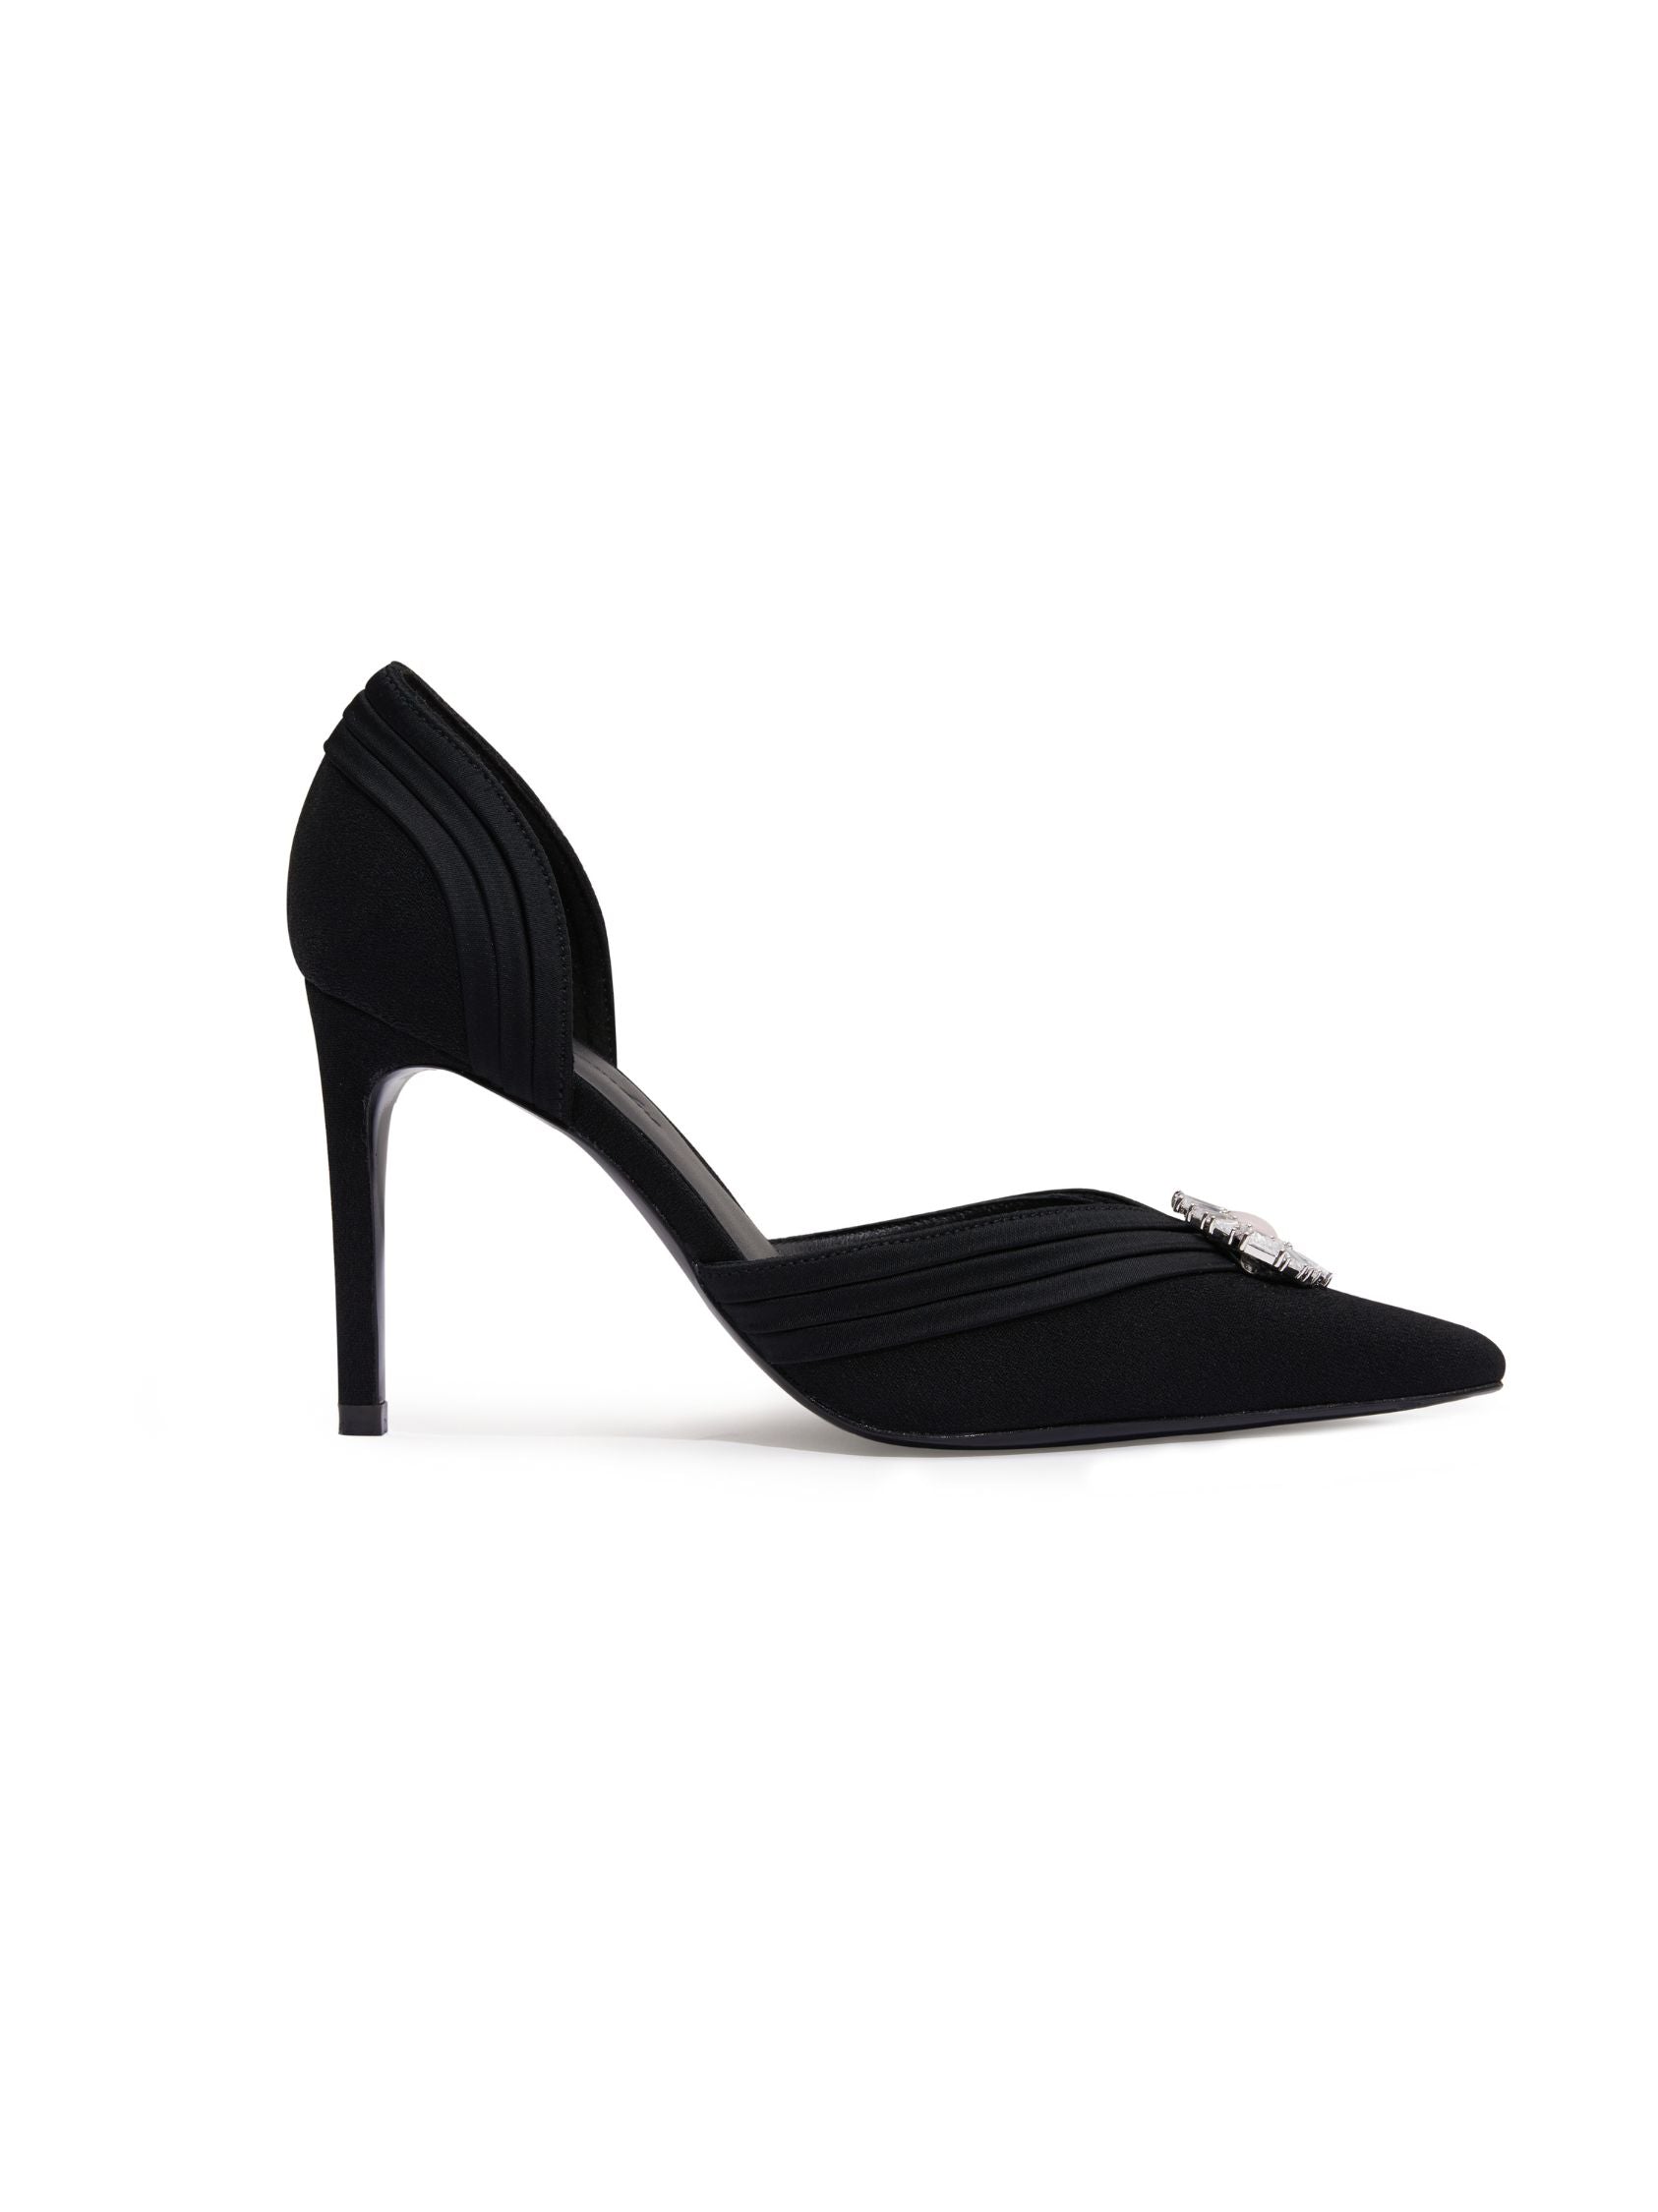 Diana Diamond Heels (Black)